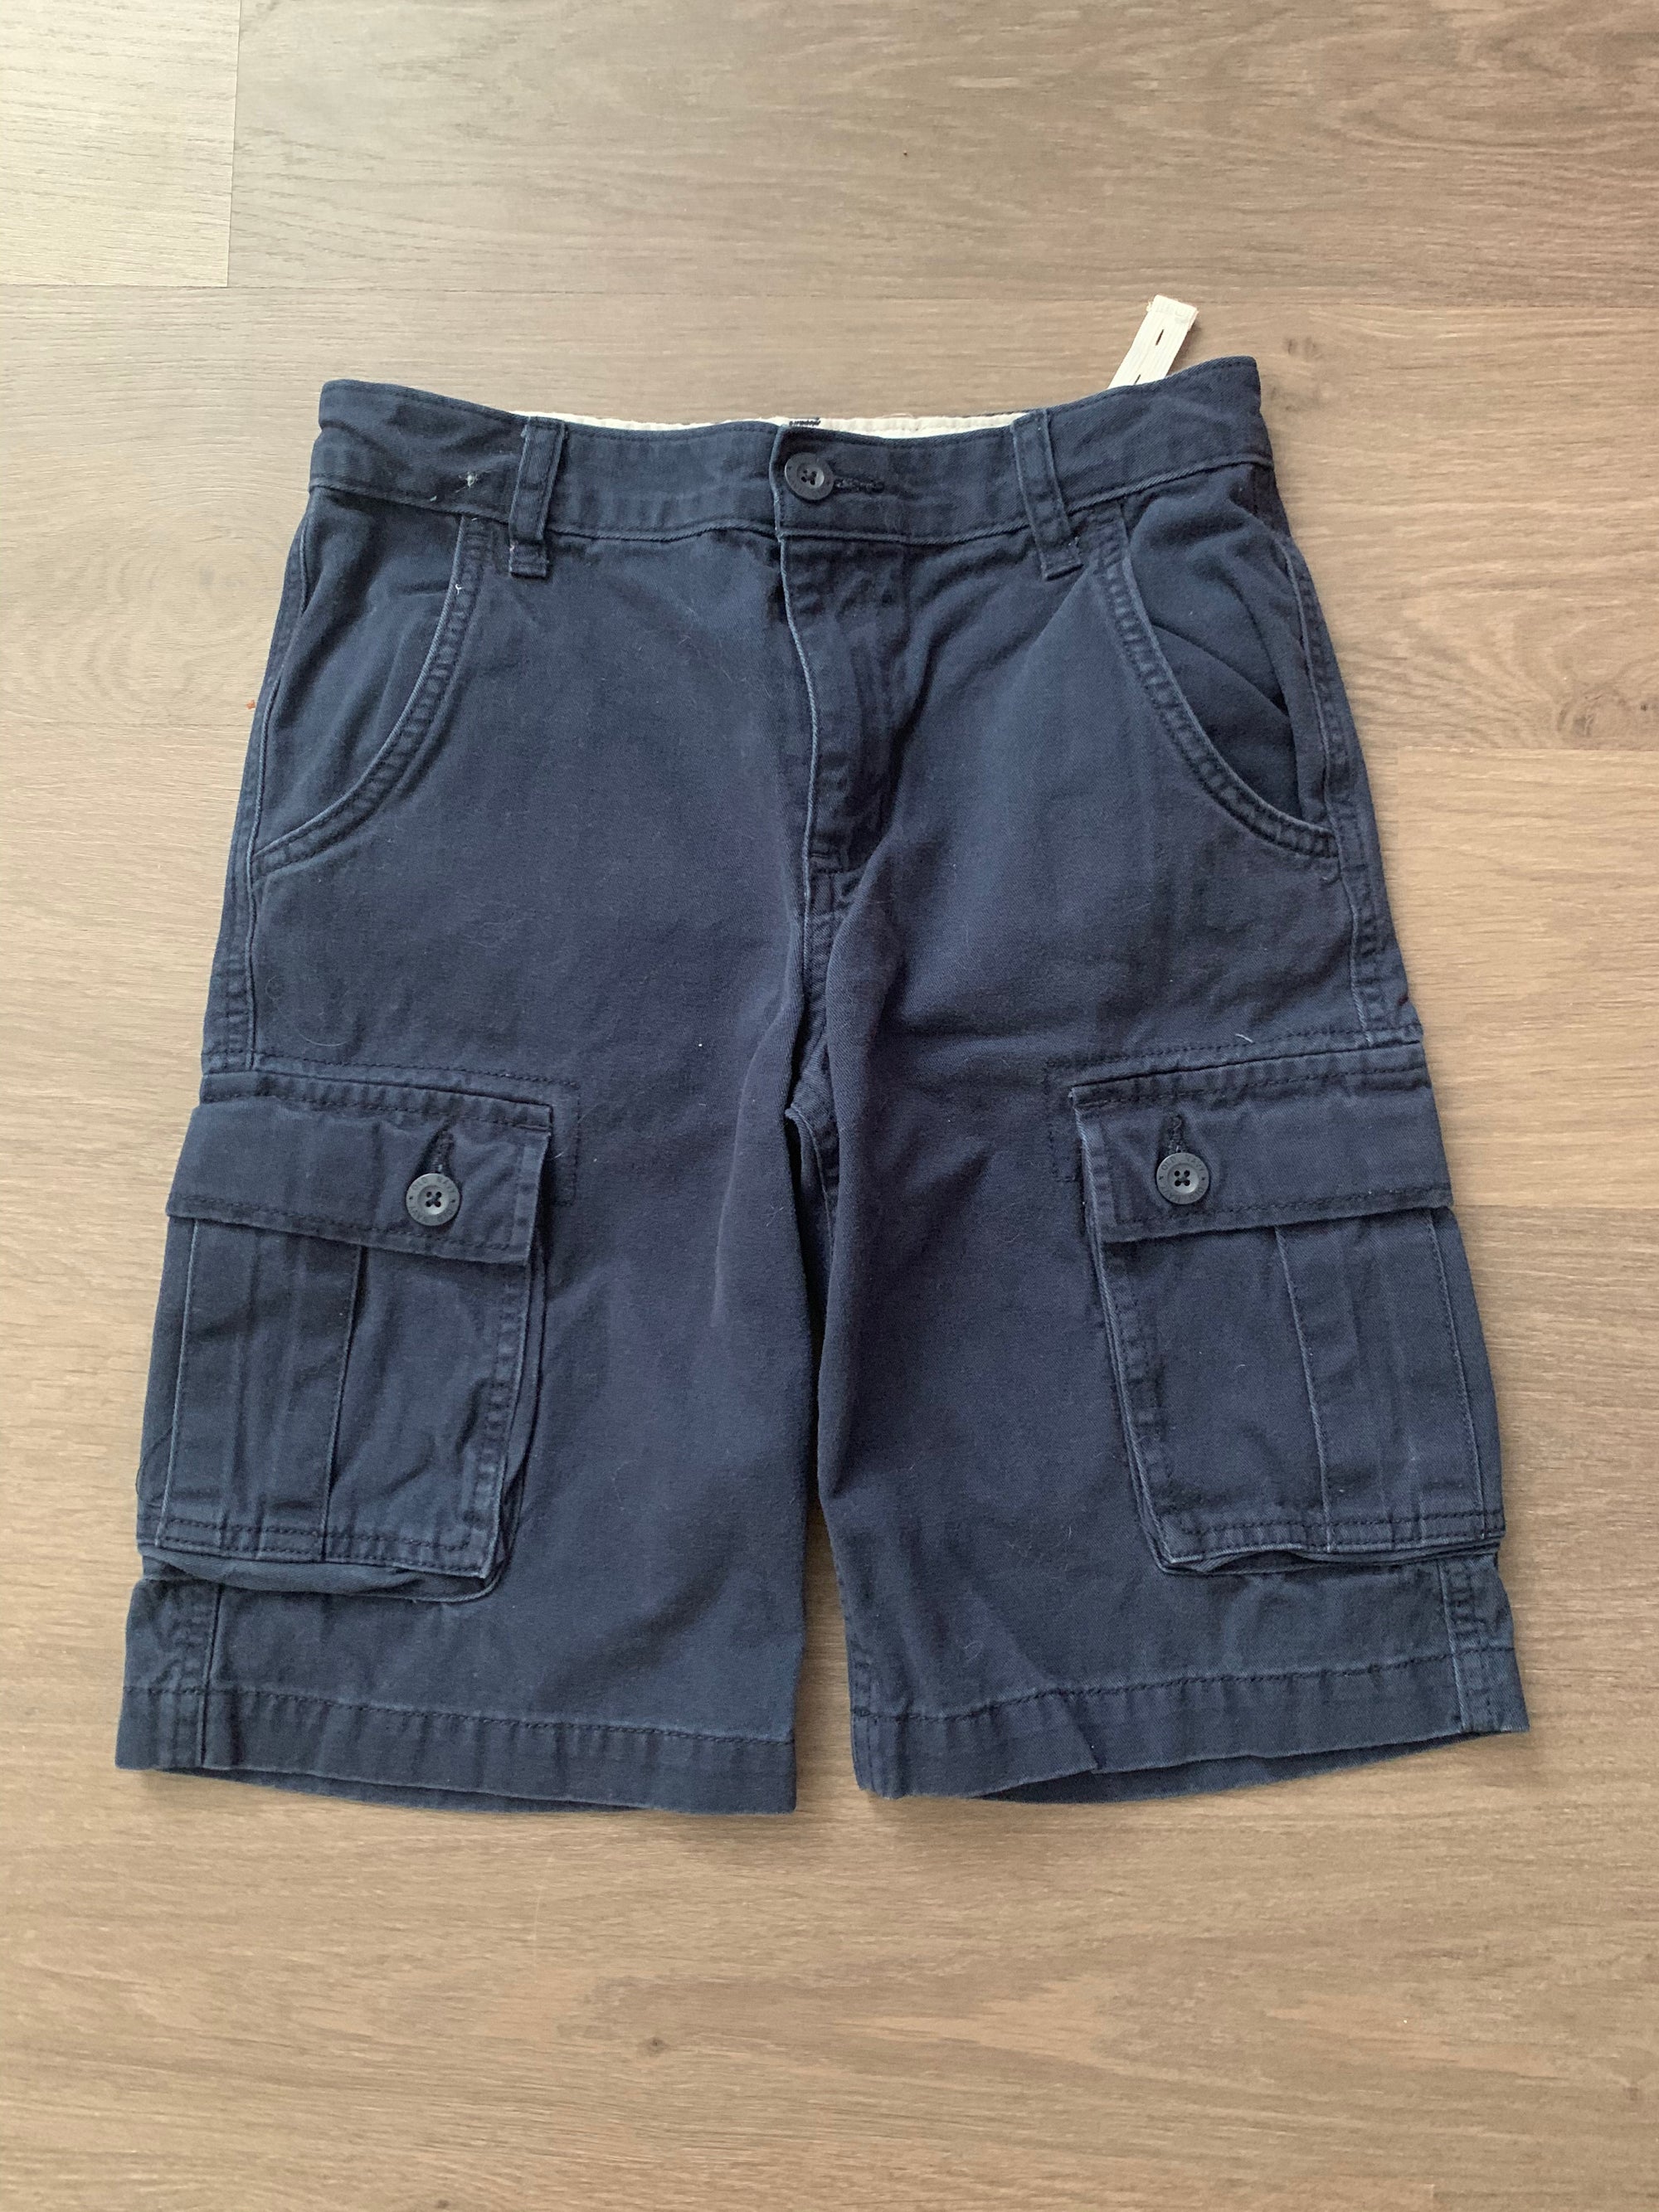 Shorts (Boys Size 10)